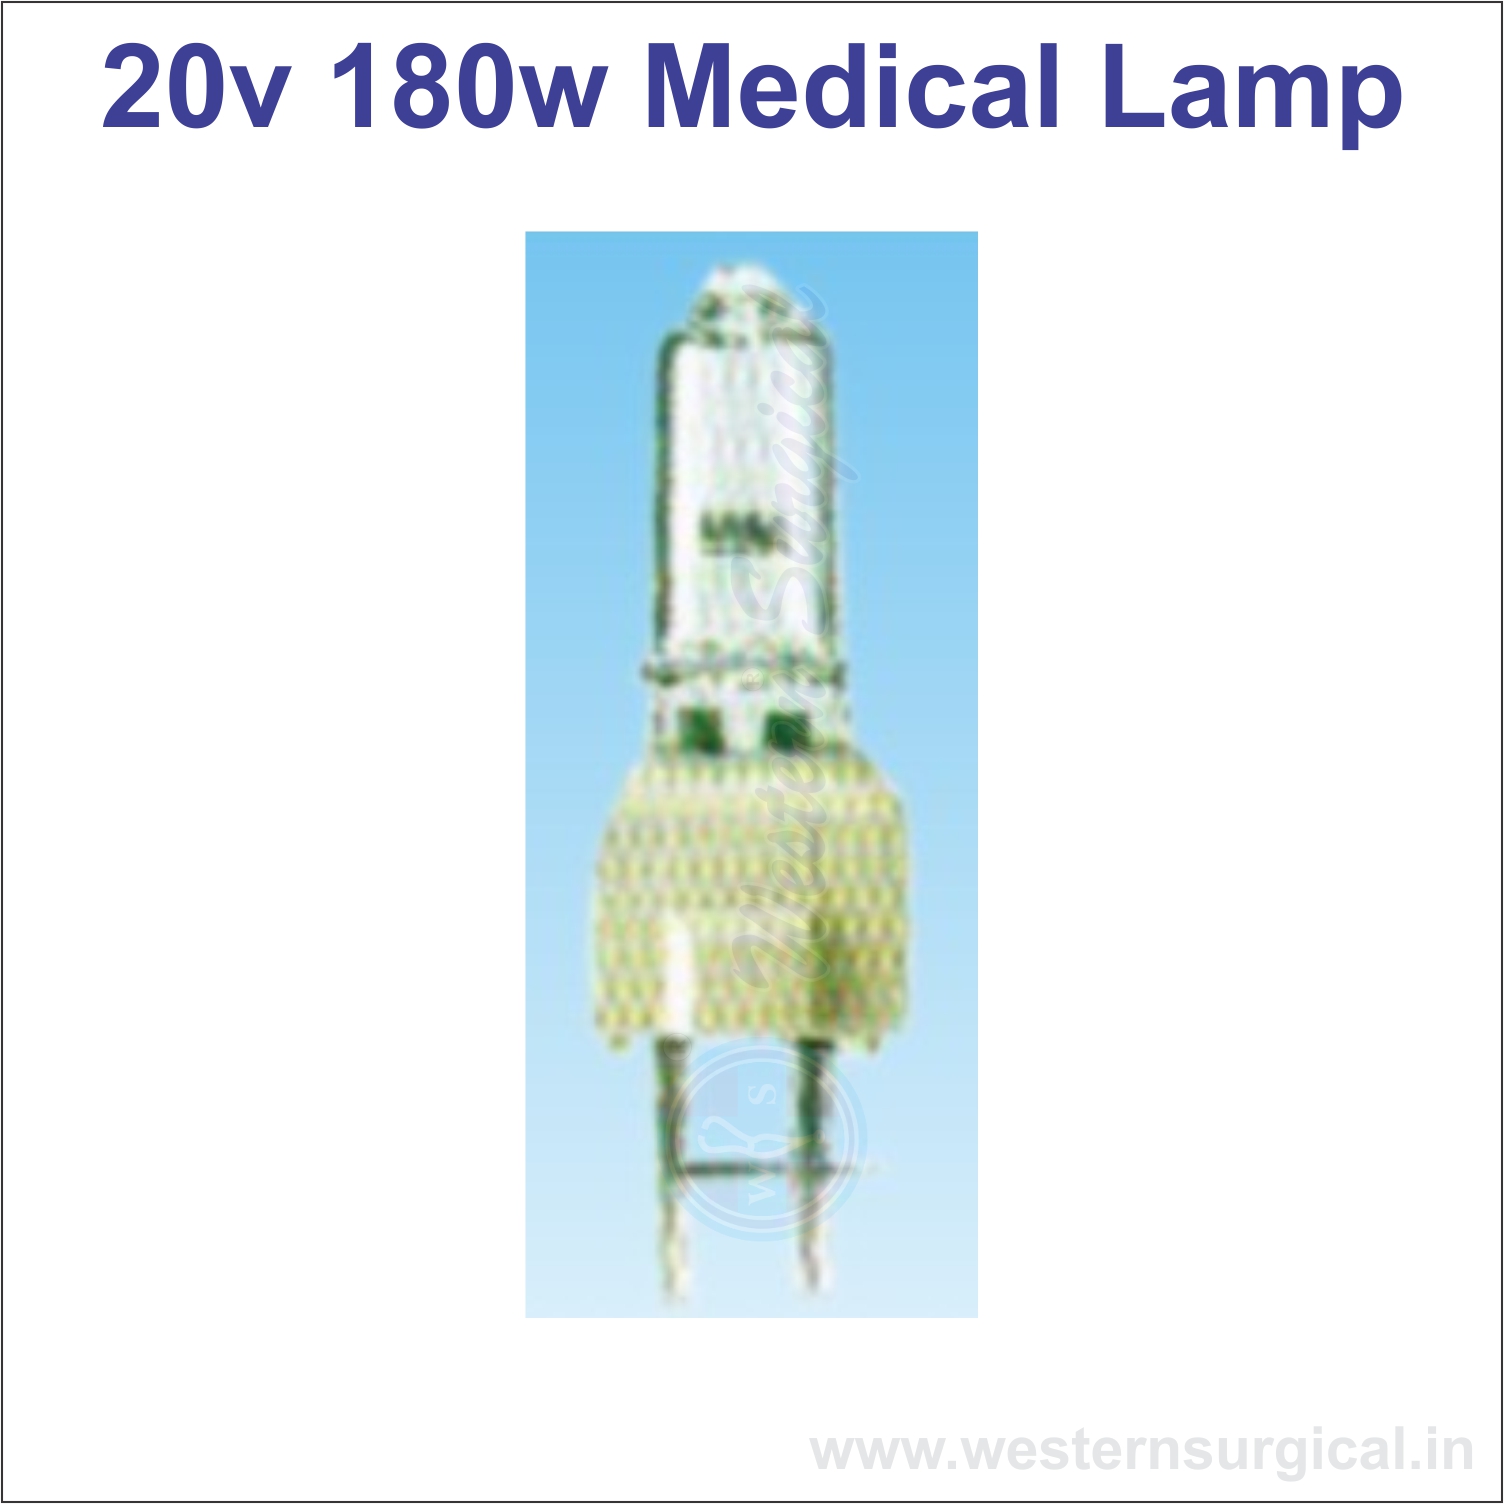 20V 180W Medical Lamp